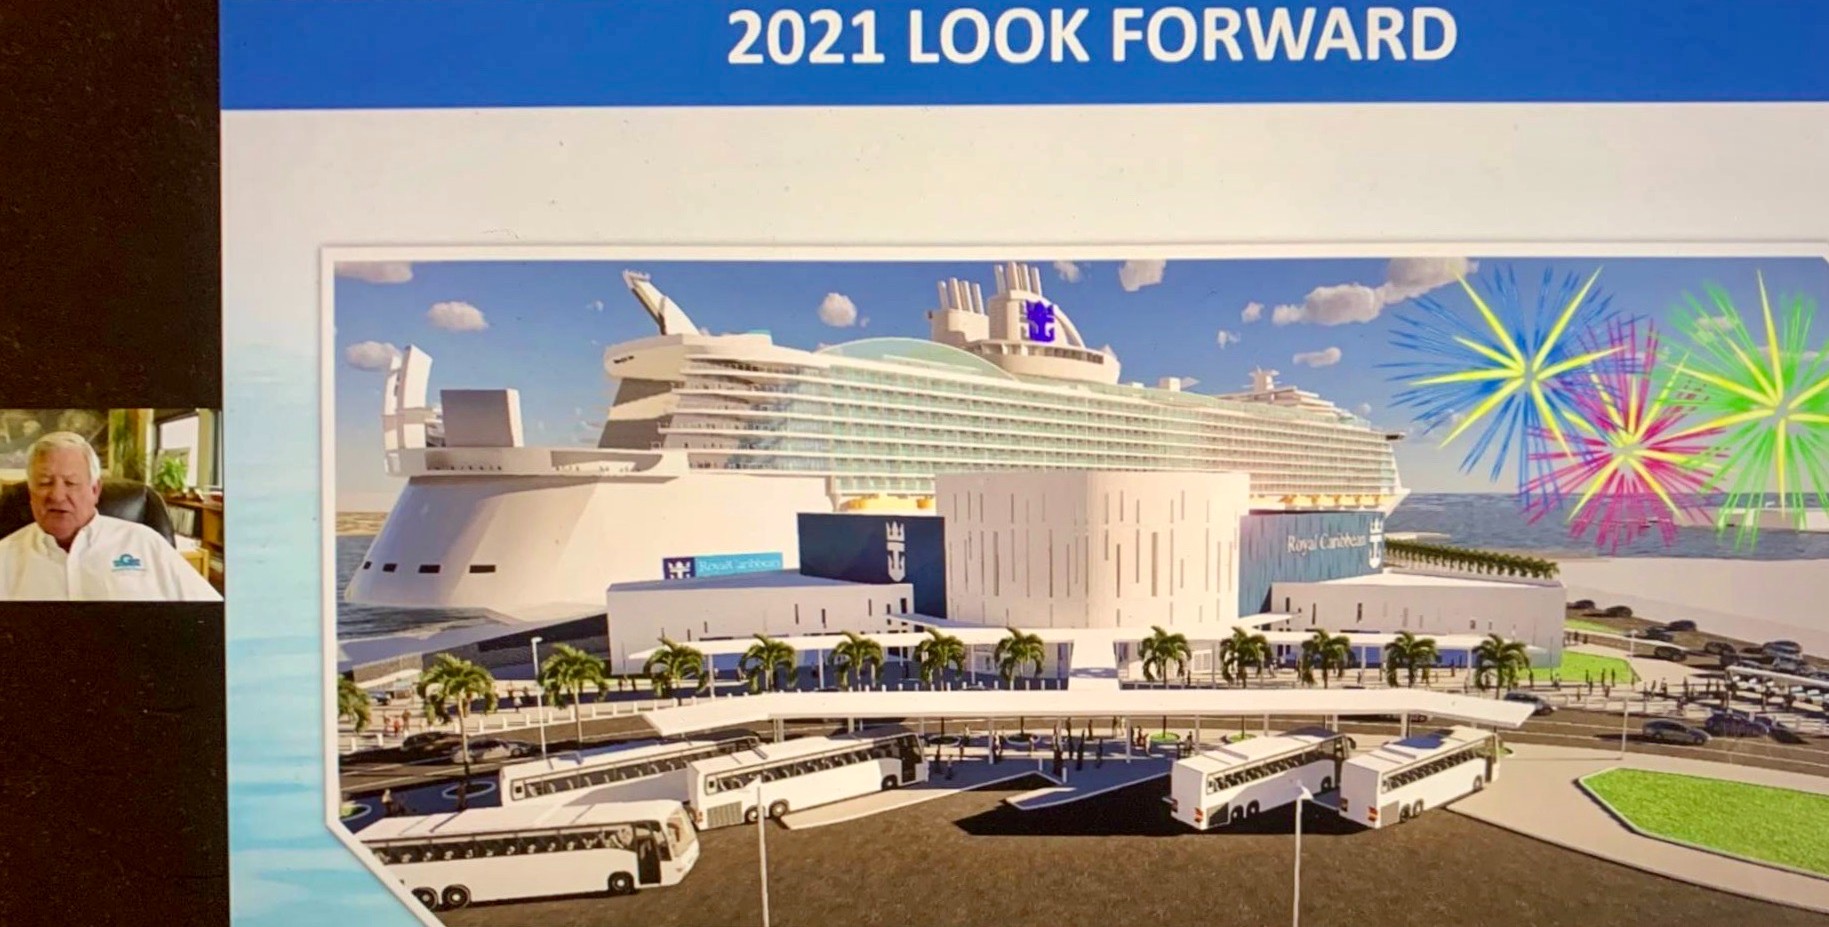 Royal Caribbean's new Galveston cruise terminal is going ahead